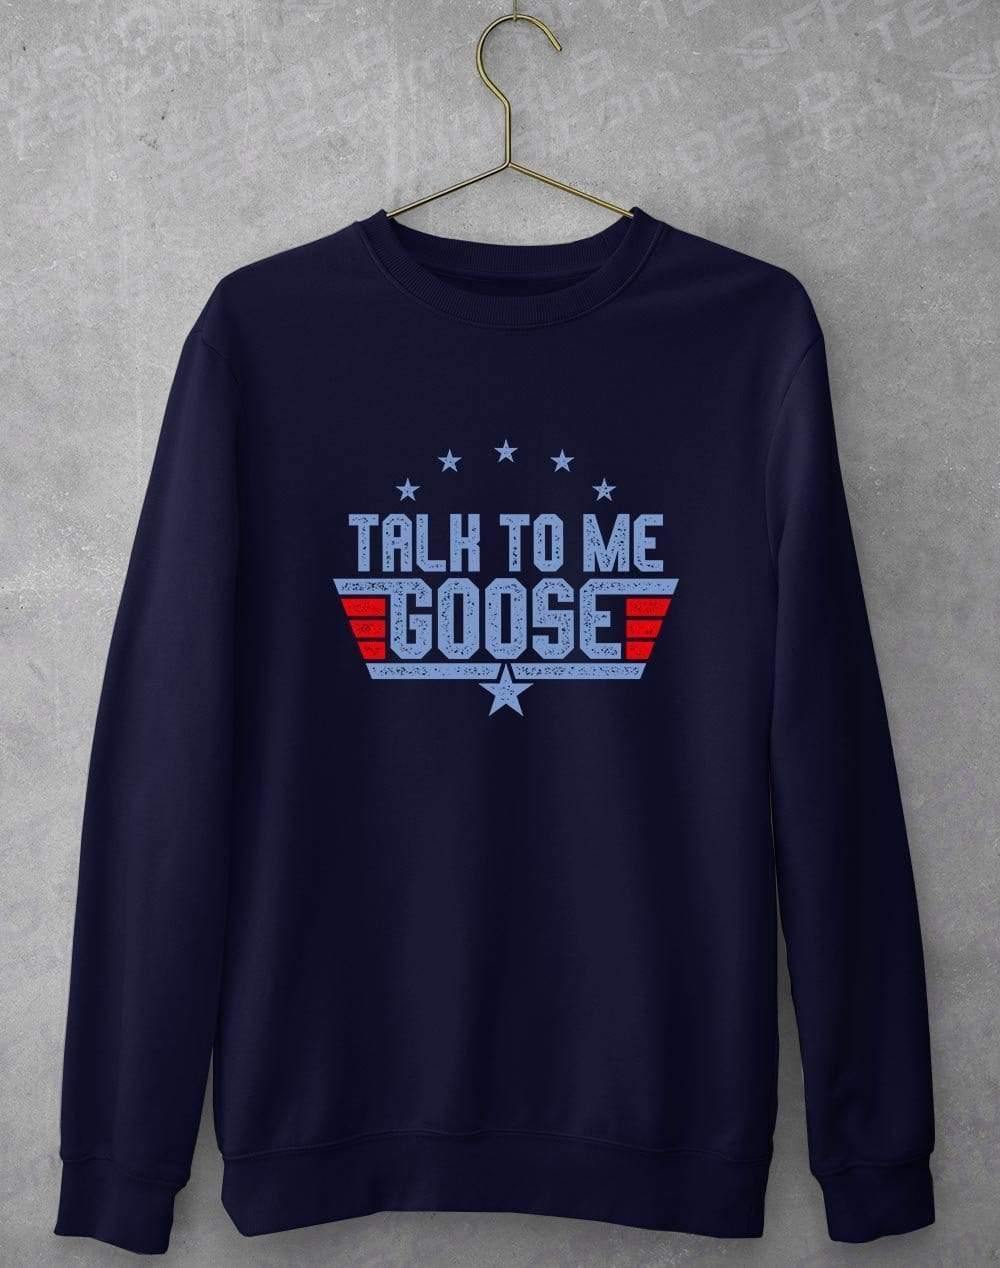 Talk to me Goose Sweatshirt S / Oxford Navy  - Off World Tees